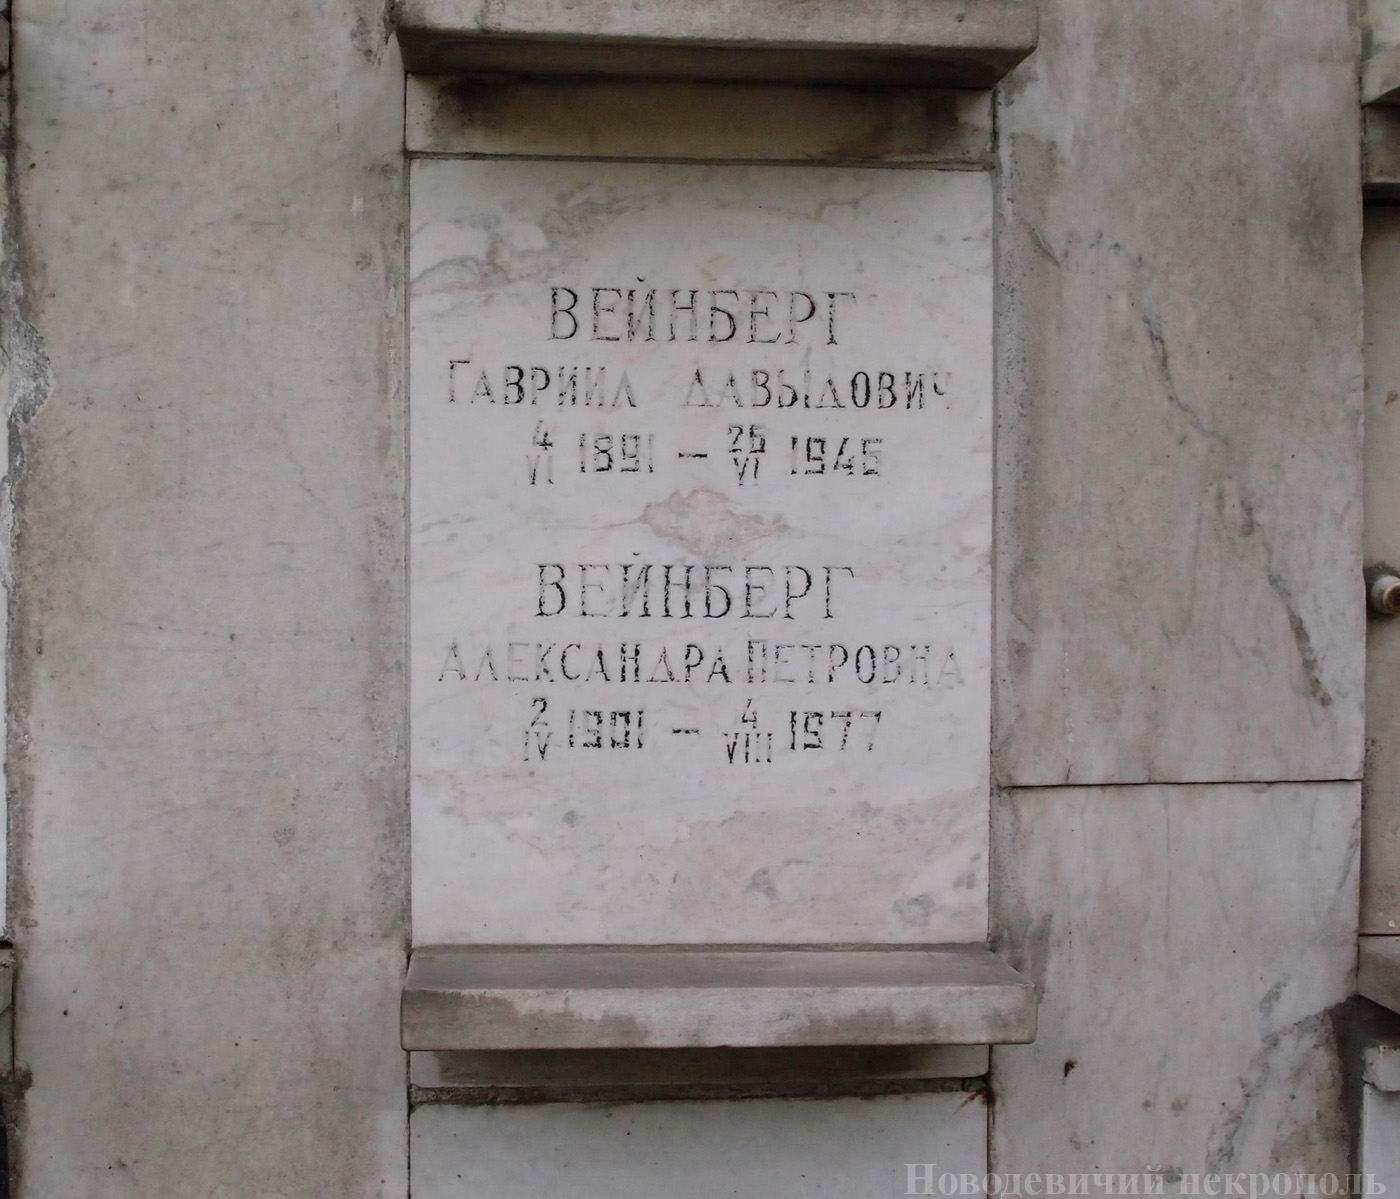 Плита на нише Вейнберга Г.Д. (1891-1946), на Новодевичьем кладбище (колумбарий [65]-4-3).